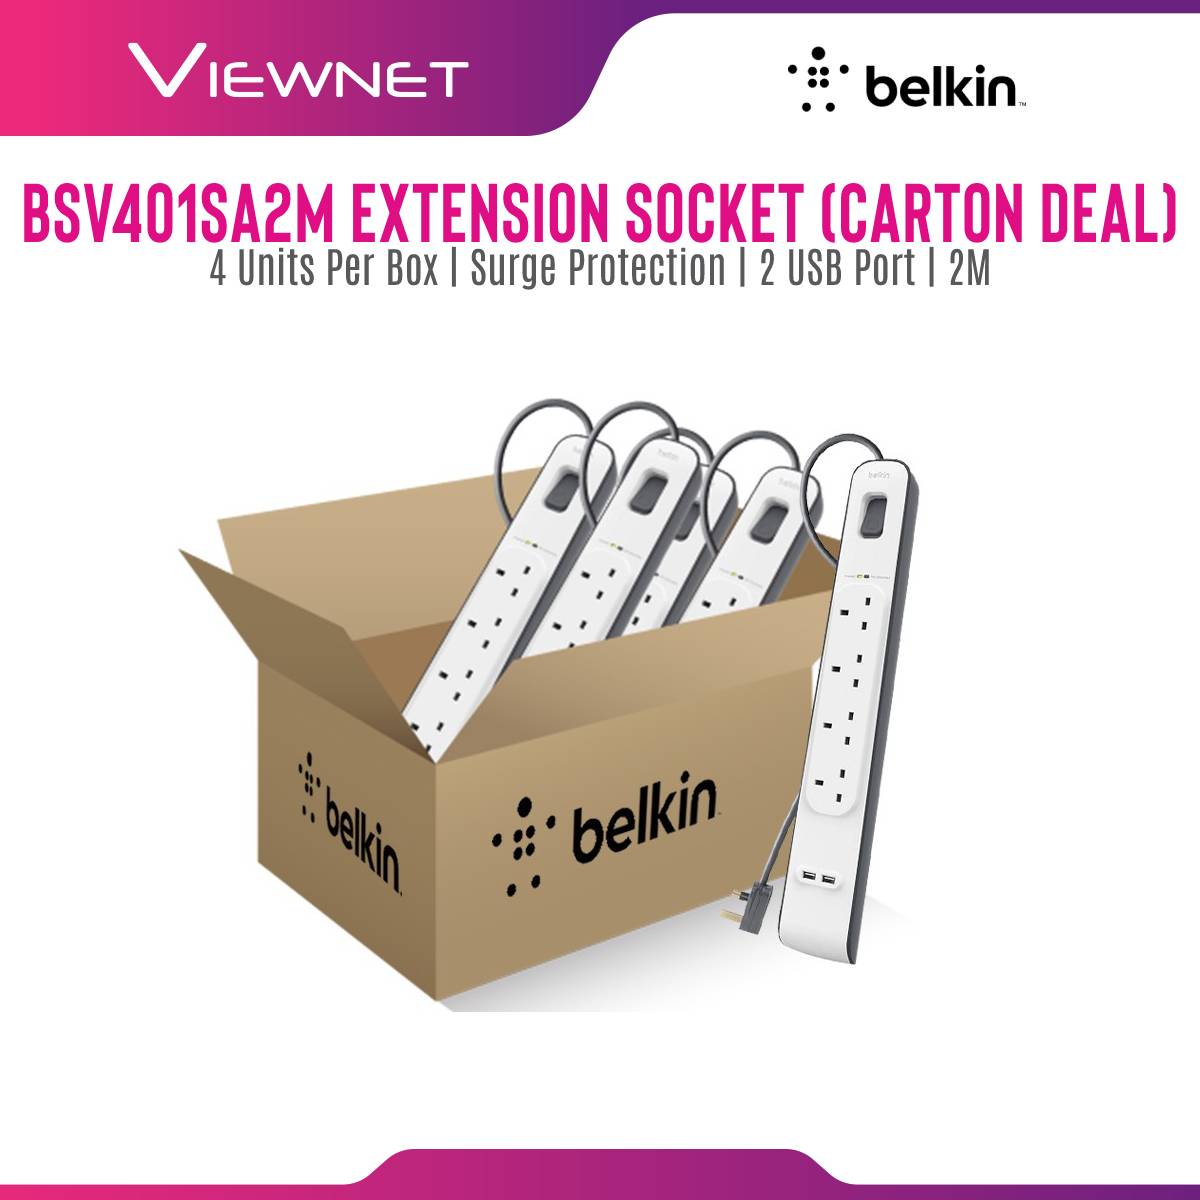 [Carton Deal] Belkin BSV401sa2M 4 Way Surge+2.4A USB Protection - 2 Meter (4 Units Per Box)